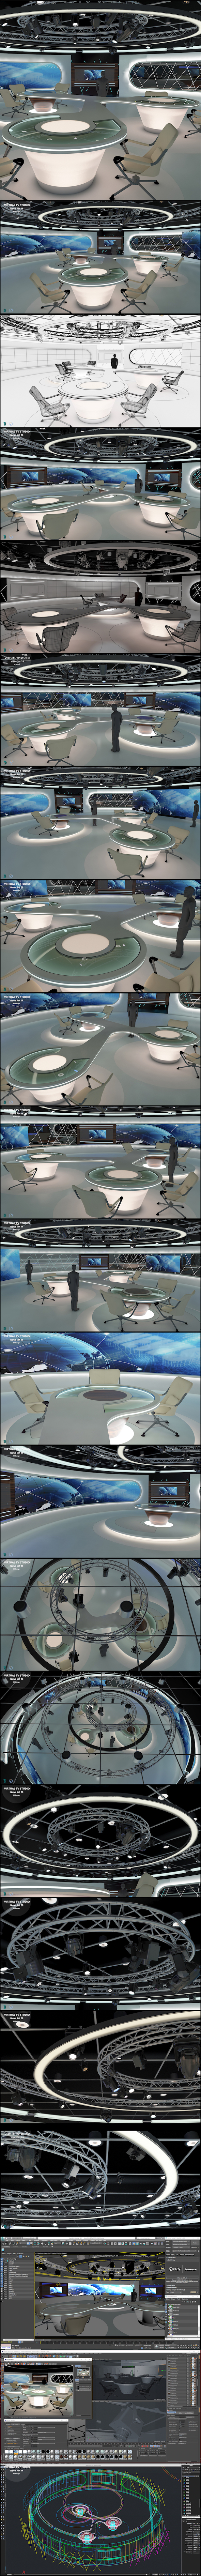 Virtual TV Studio News Set 28 - 3D Model Designs